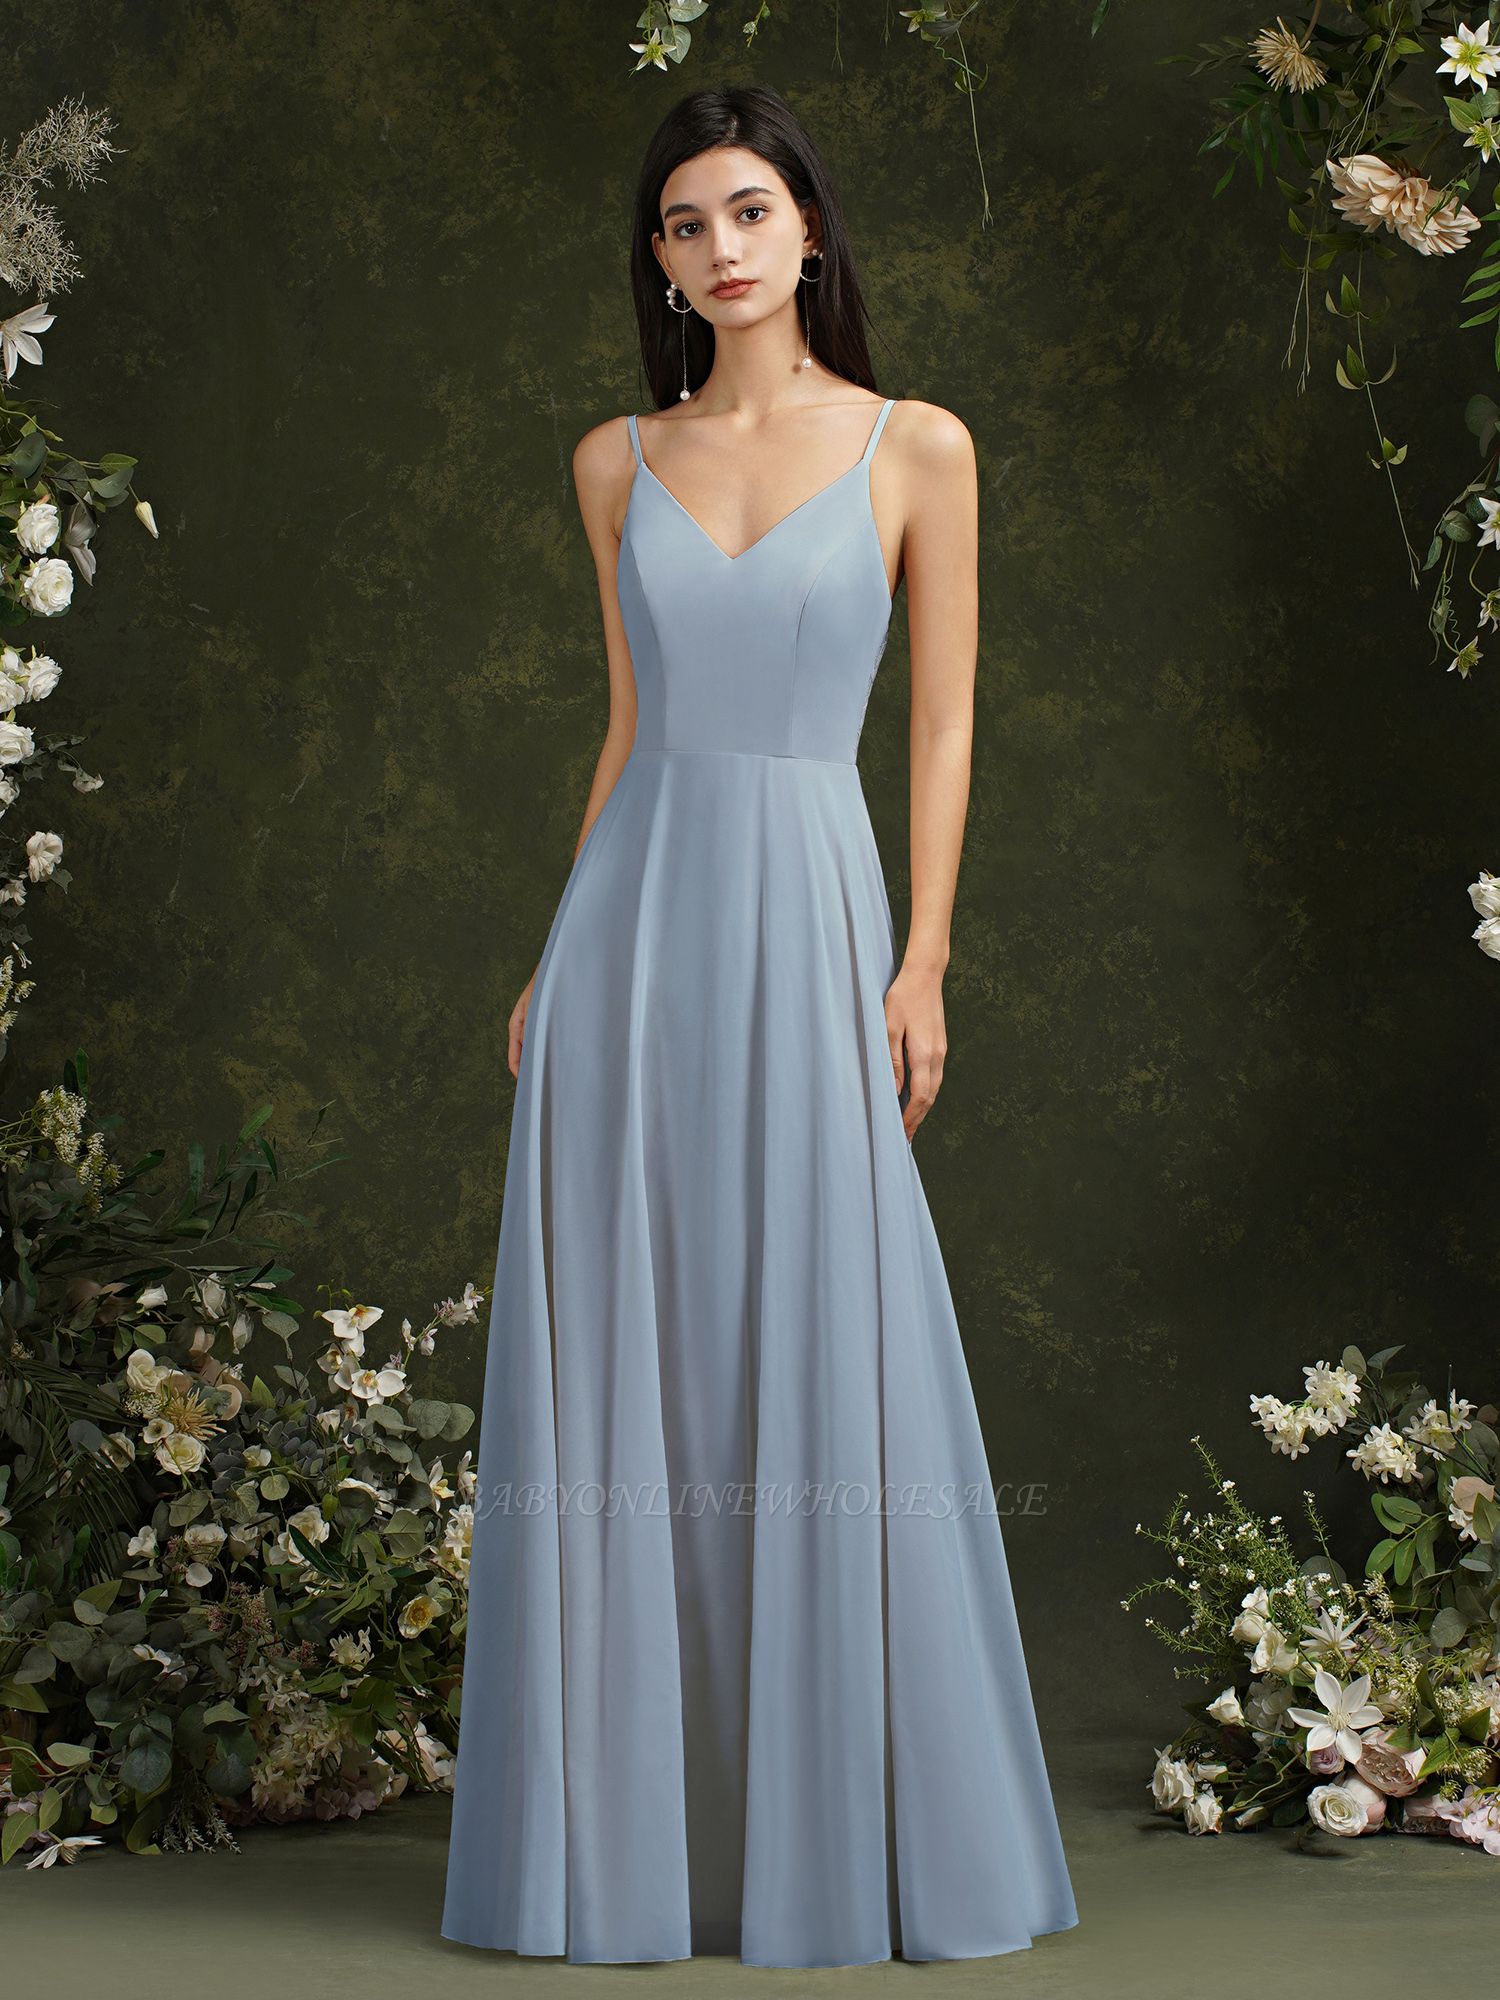 Elegant Sleeveless Aline Long Bridesmaid Dress Backless Floral Lace Evening Dress